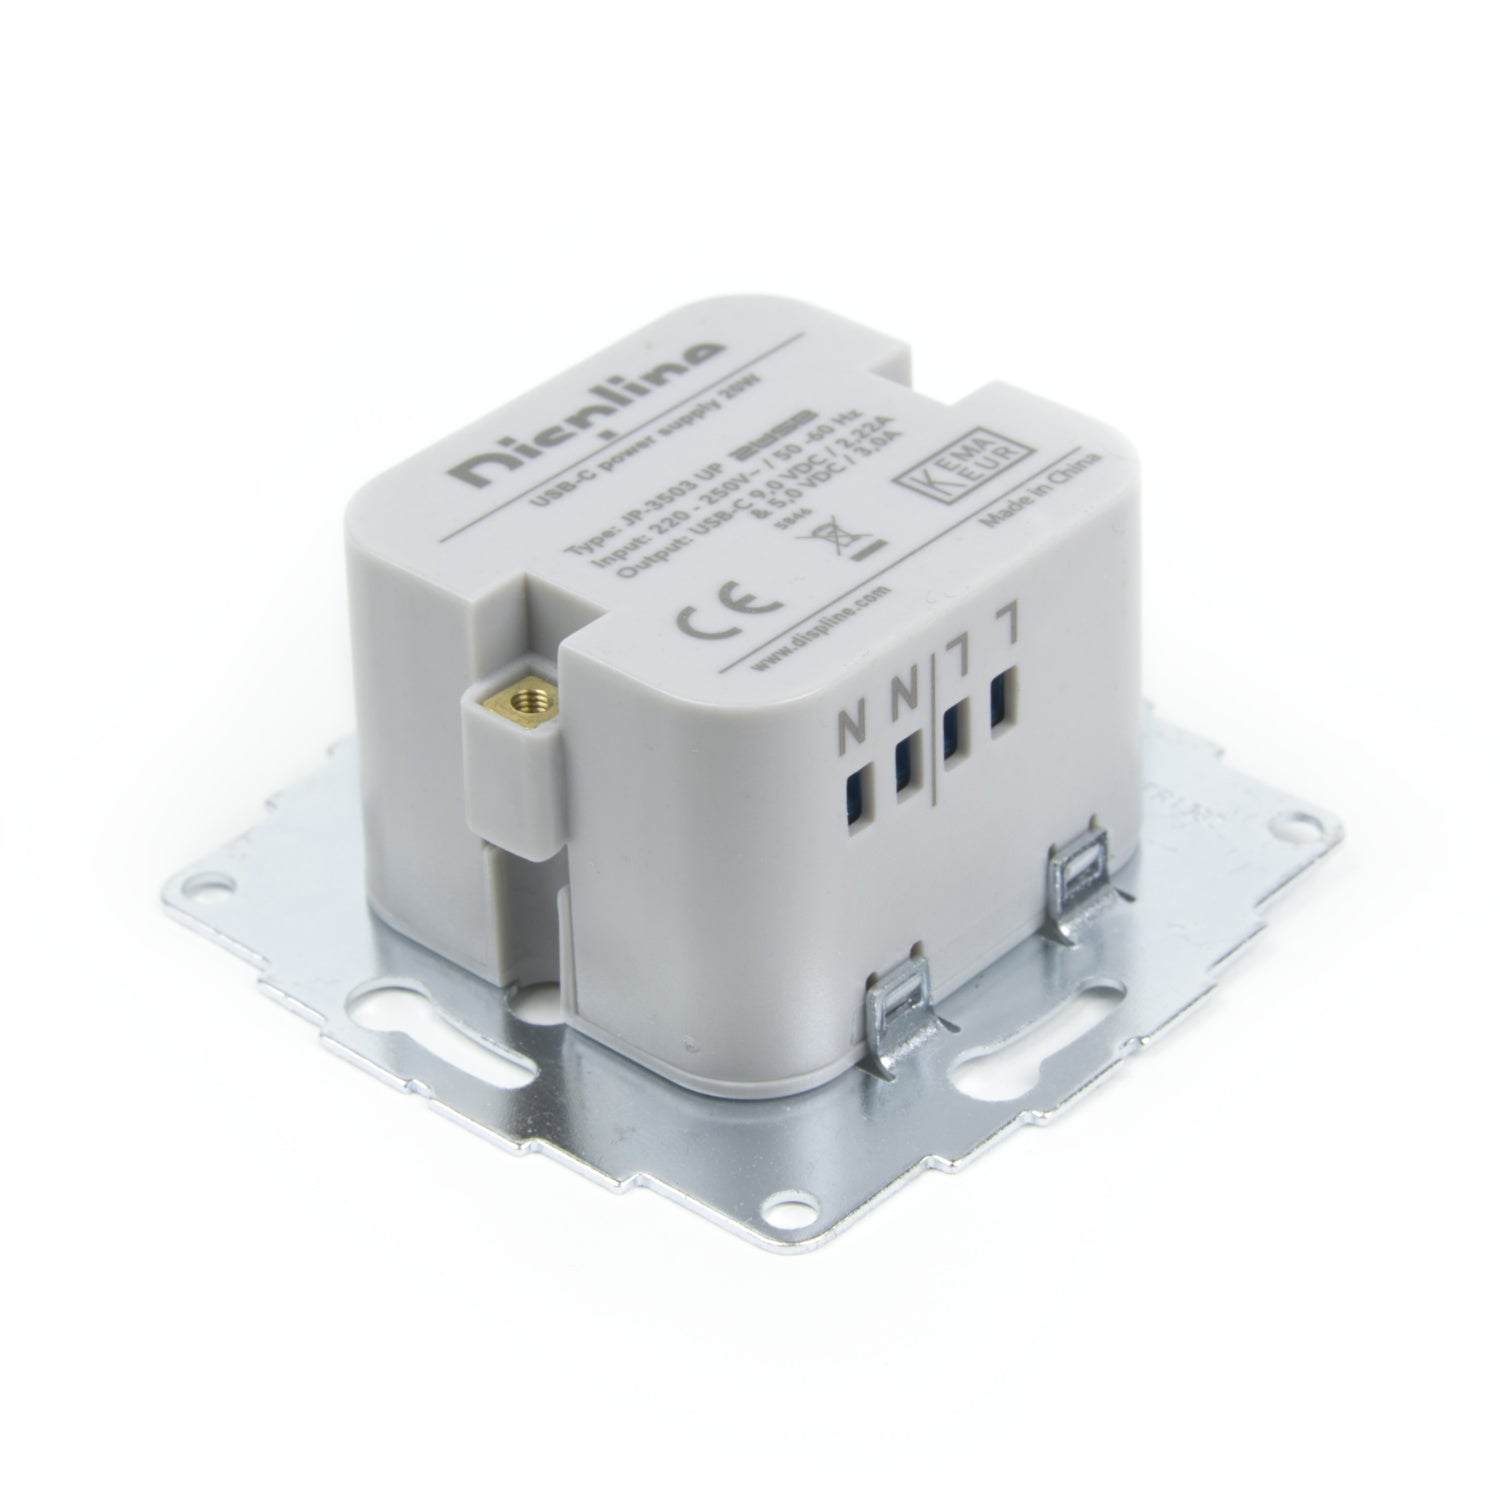 Displine 20W flush mount power supply with USB-C